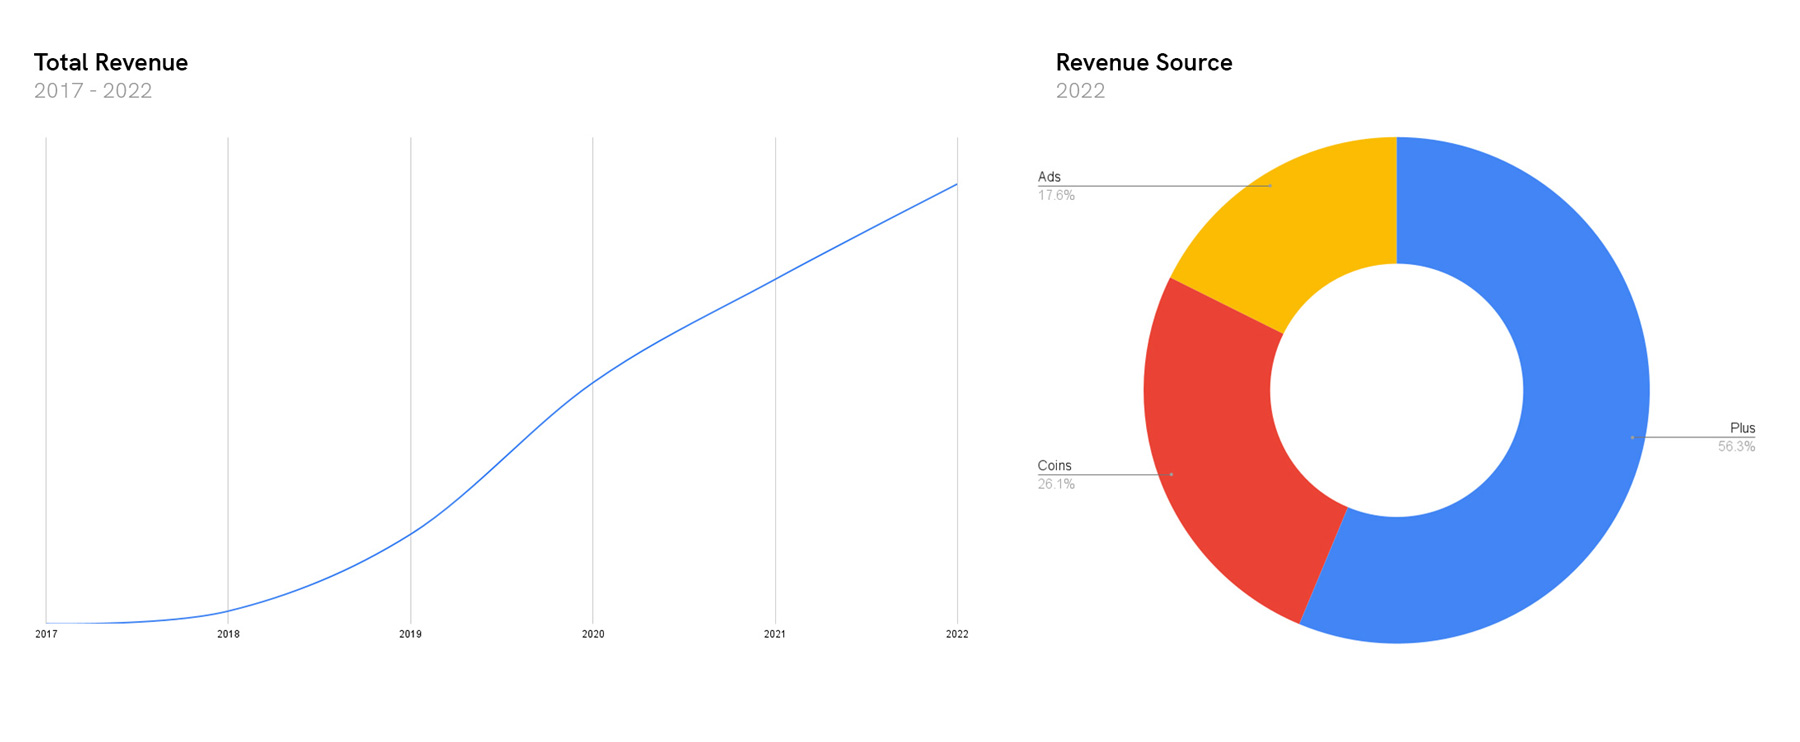 Total Revenue & Revenue Source